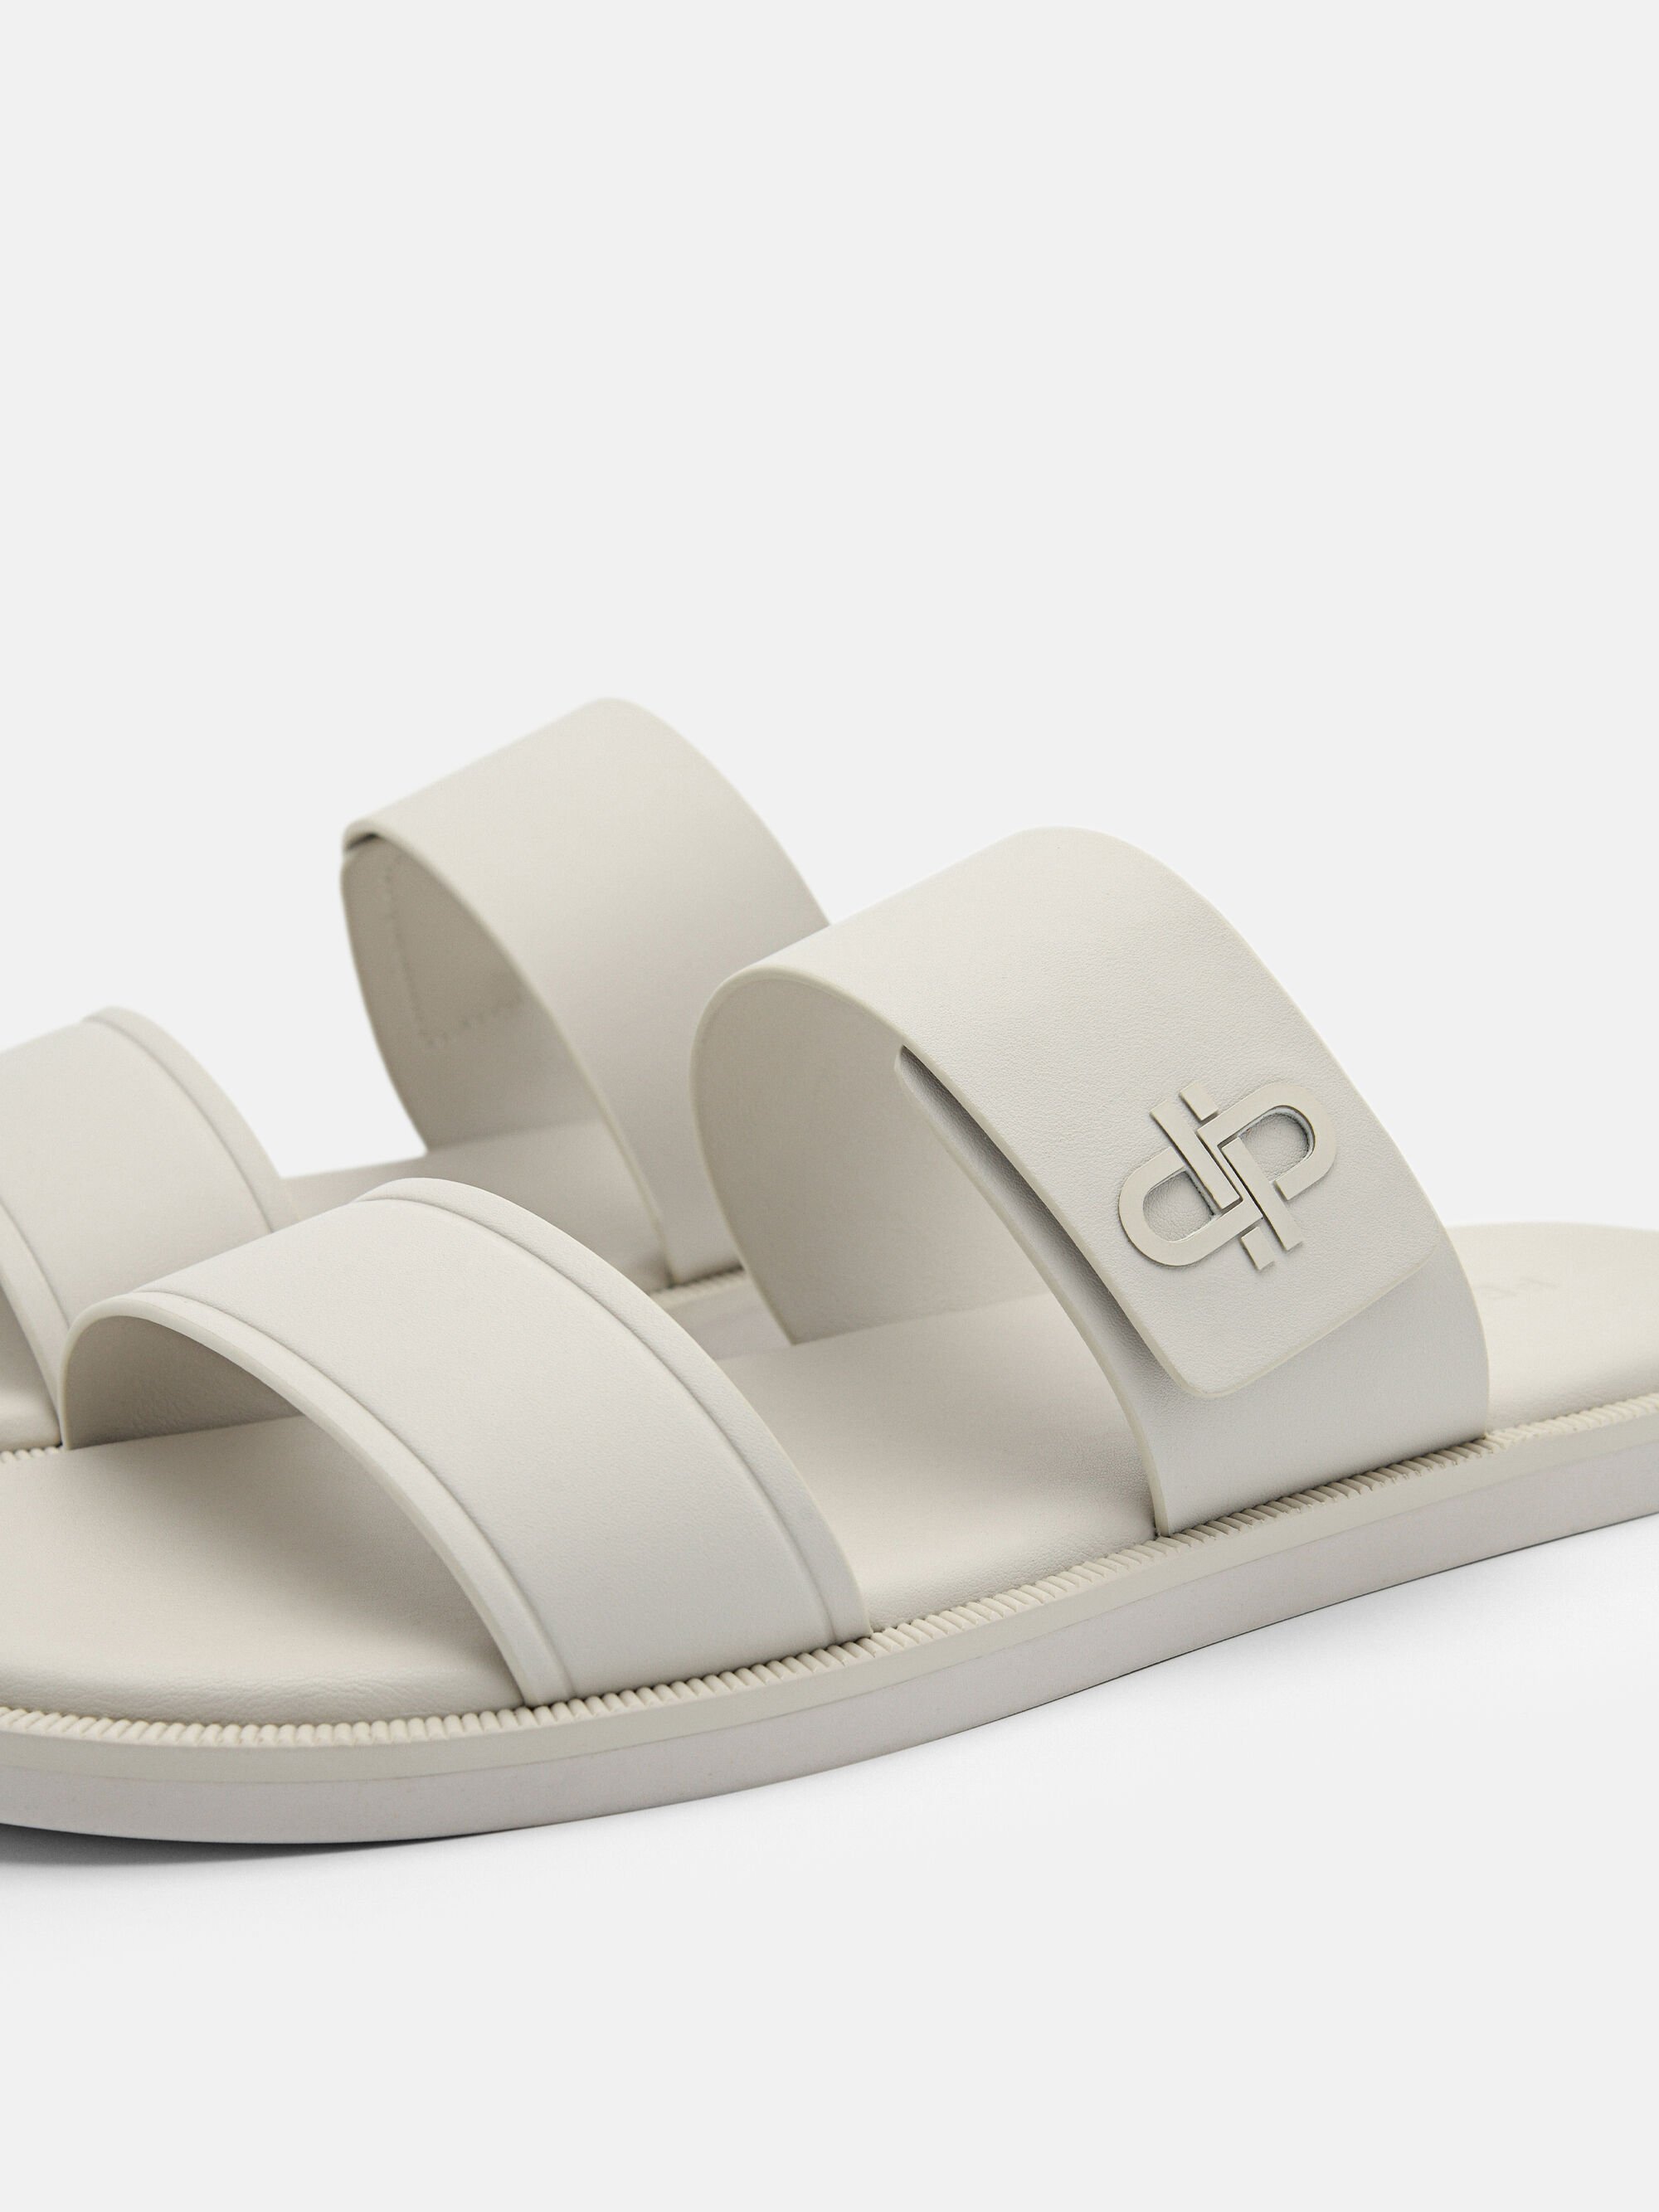 PEDRO Icon Slide Sandals, Taupe